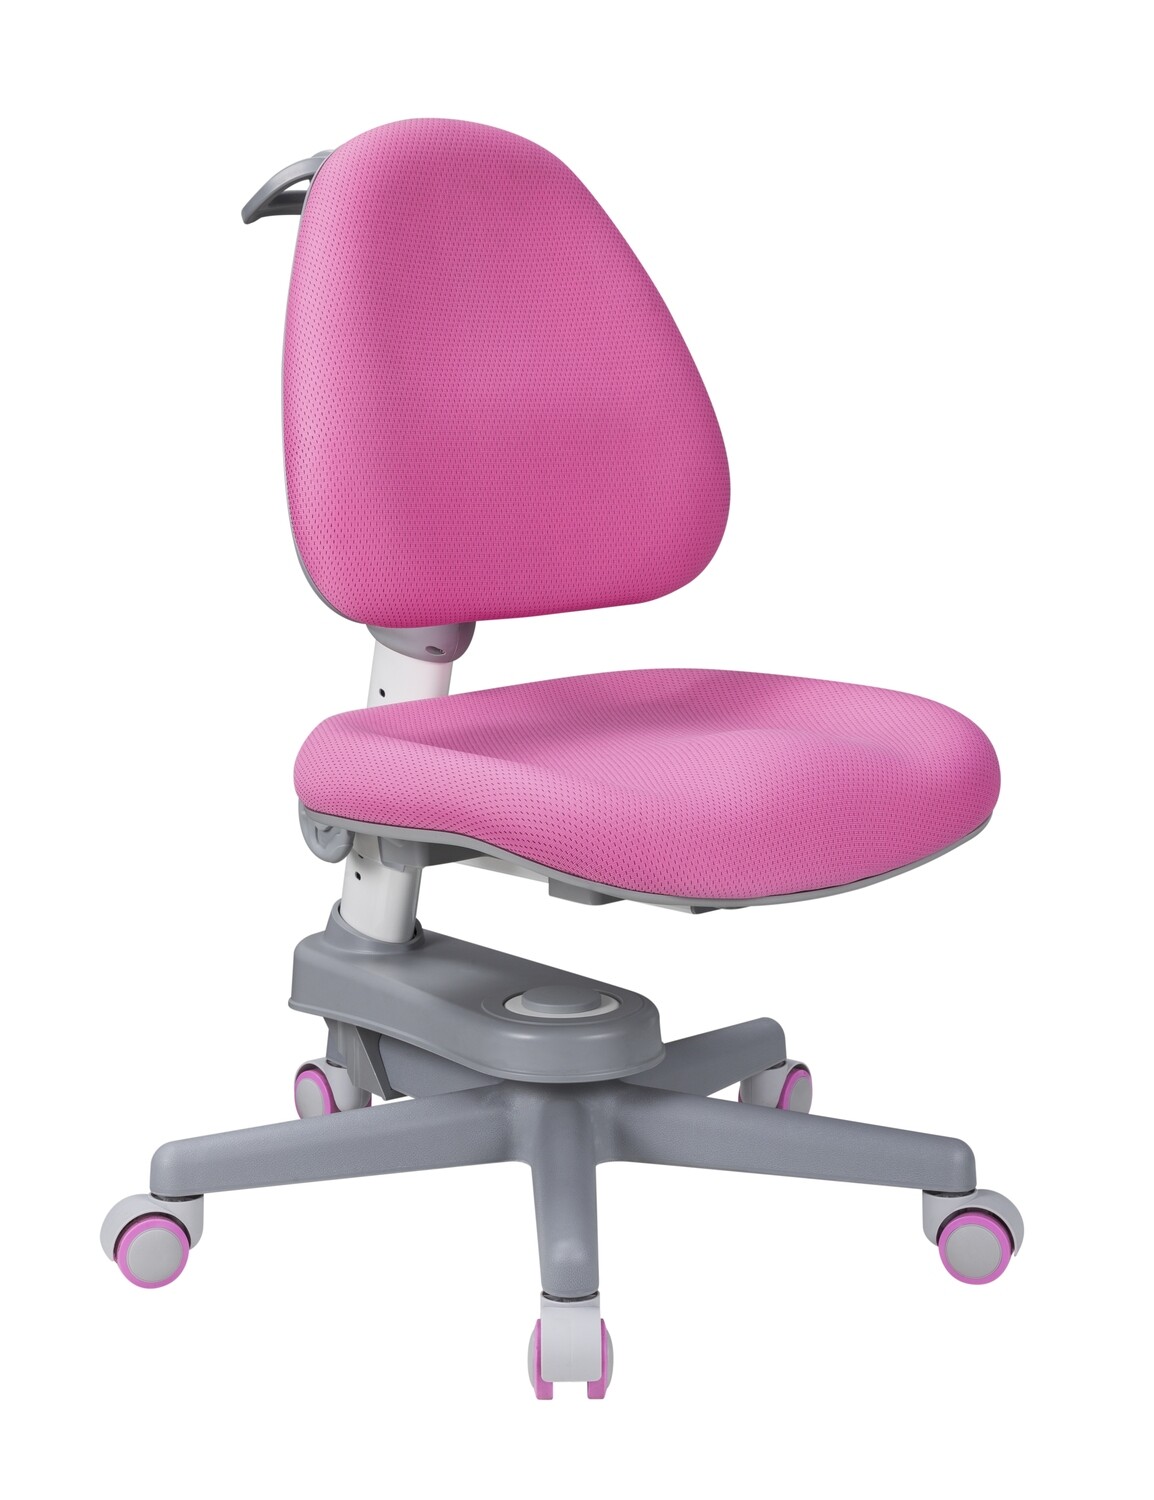 Kidomate Ergonomic study chair for Kids - Pink